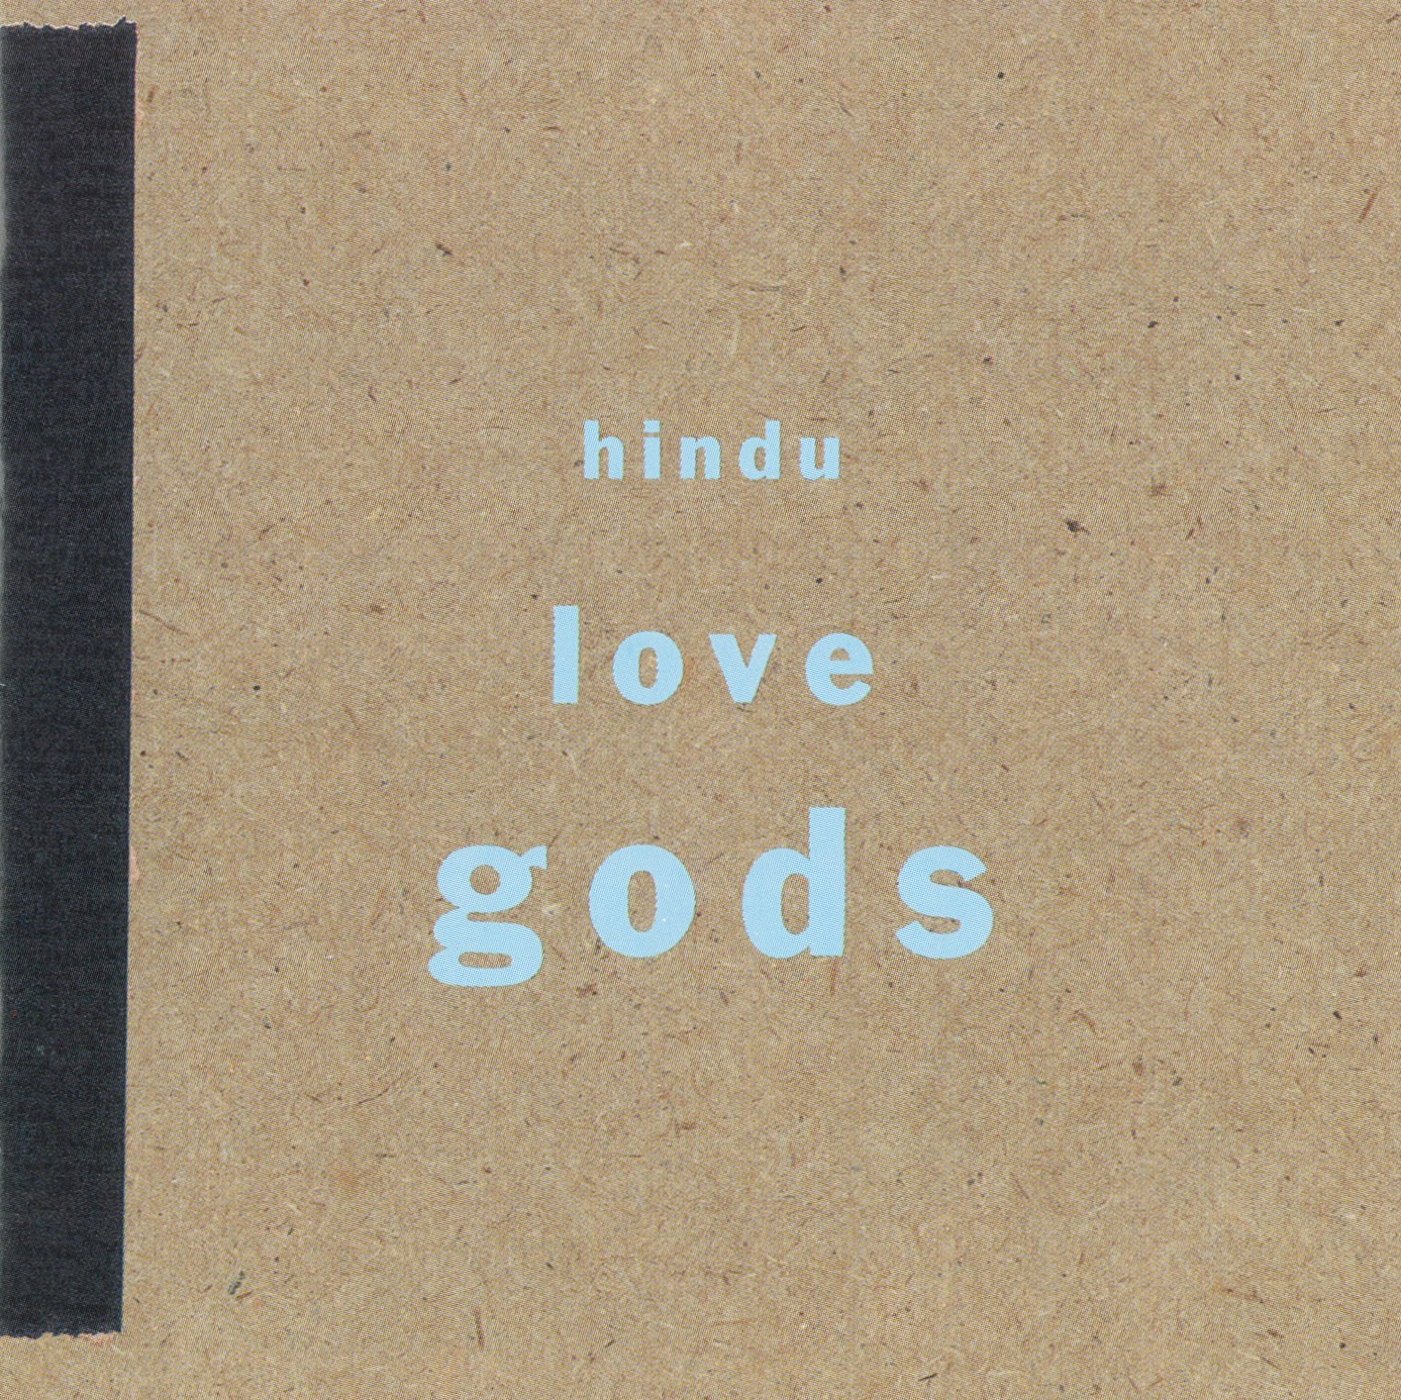 Hindu Love Gods - Hindu Love Gods (1990) [FLAC] Download